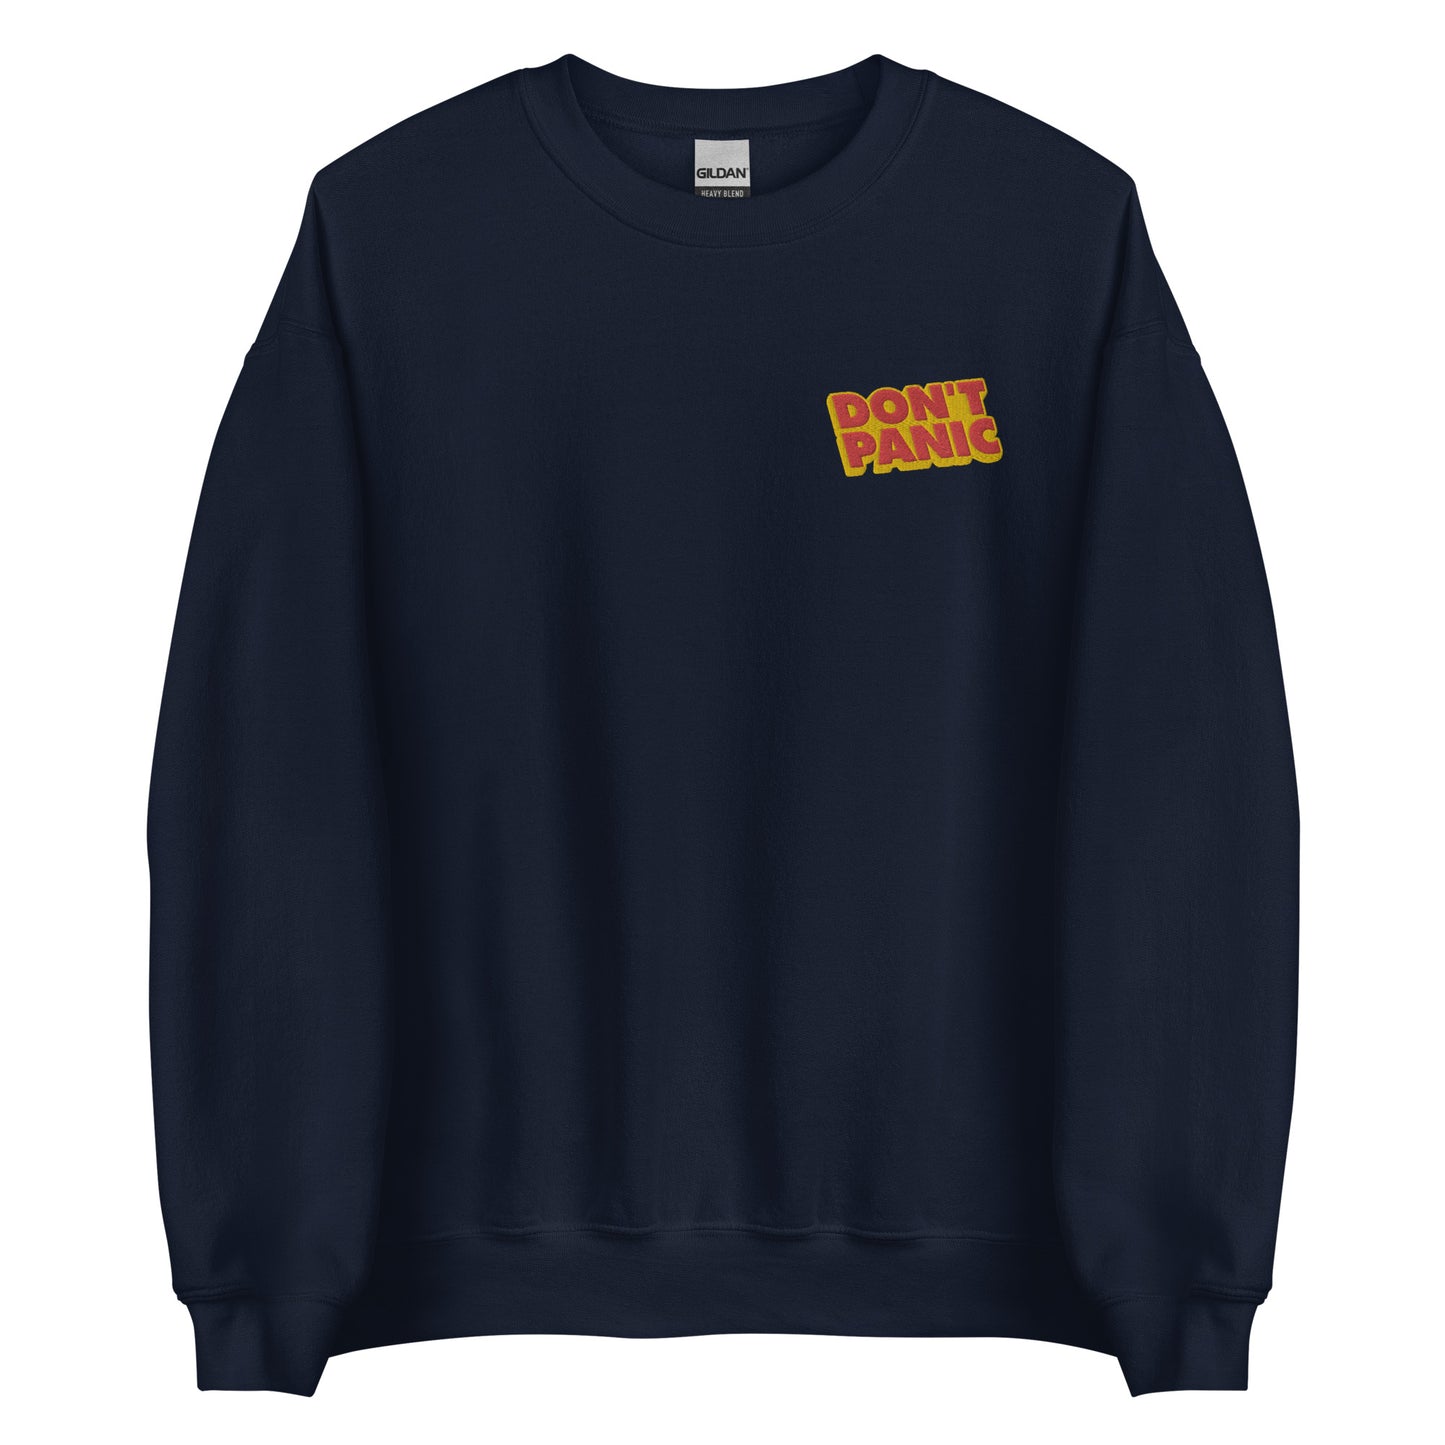 DON'T PANIC embroidered crewneck sweatshirt